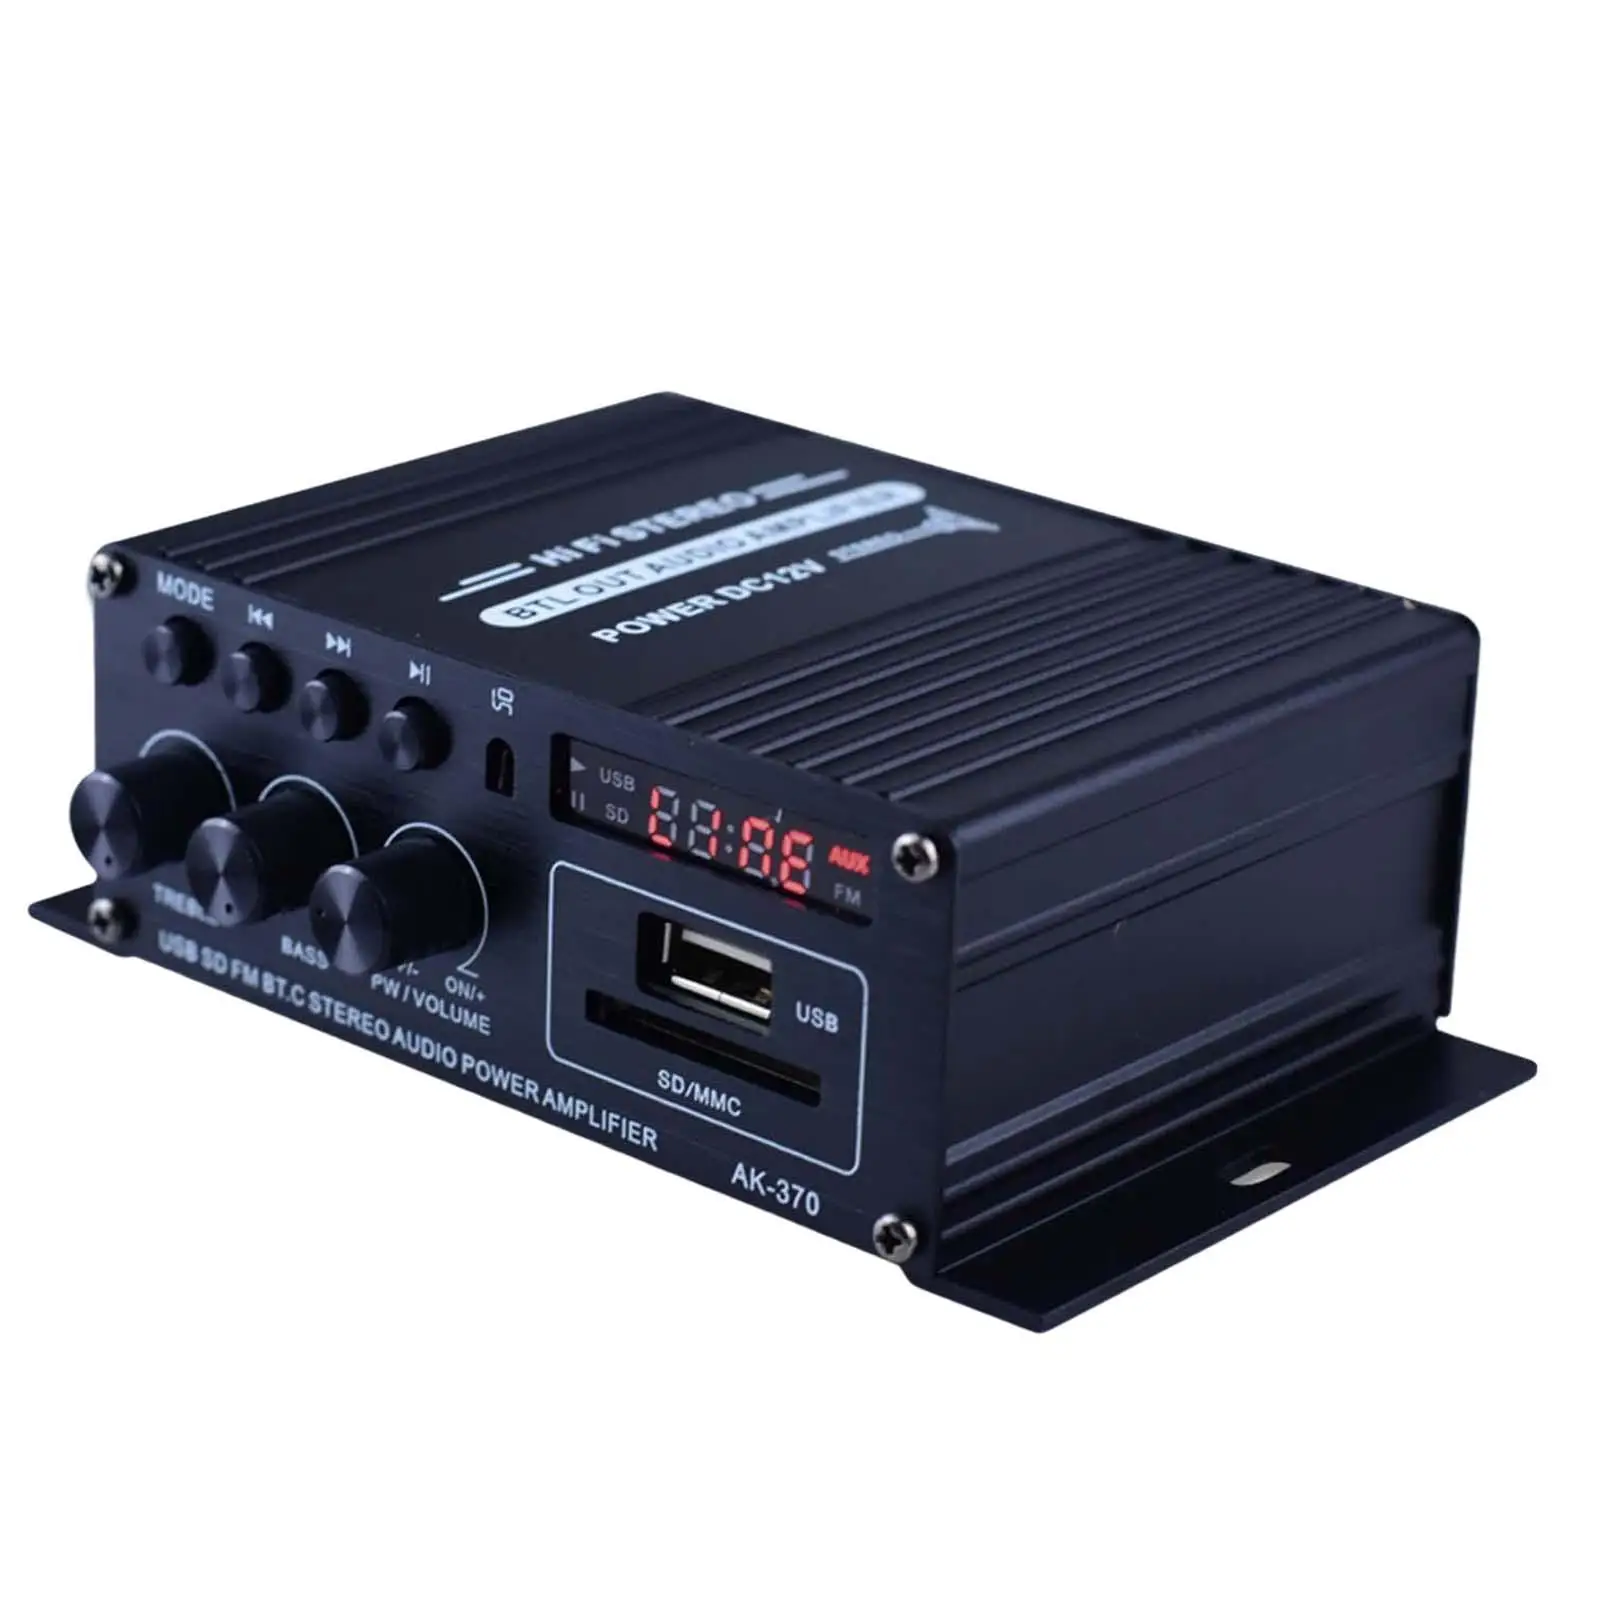 AK-370 Bluetooth Amplifier 2.0 CH 12V-24V USB SD BT FM for Car Home Bar Party Power Amplifier Mini HiFi Stereo Amp Speaker